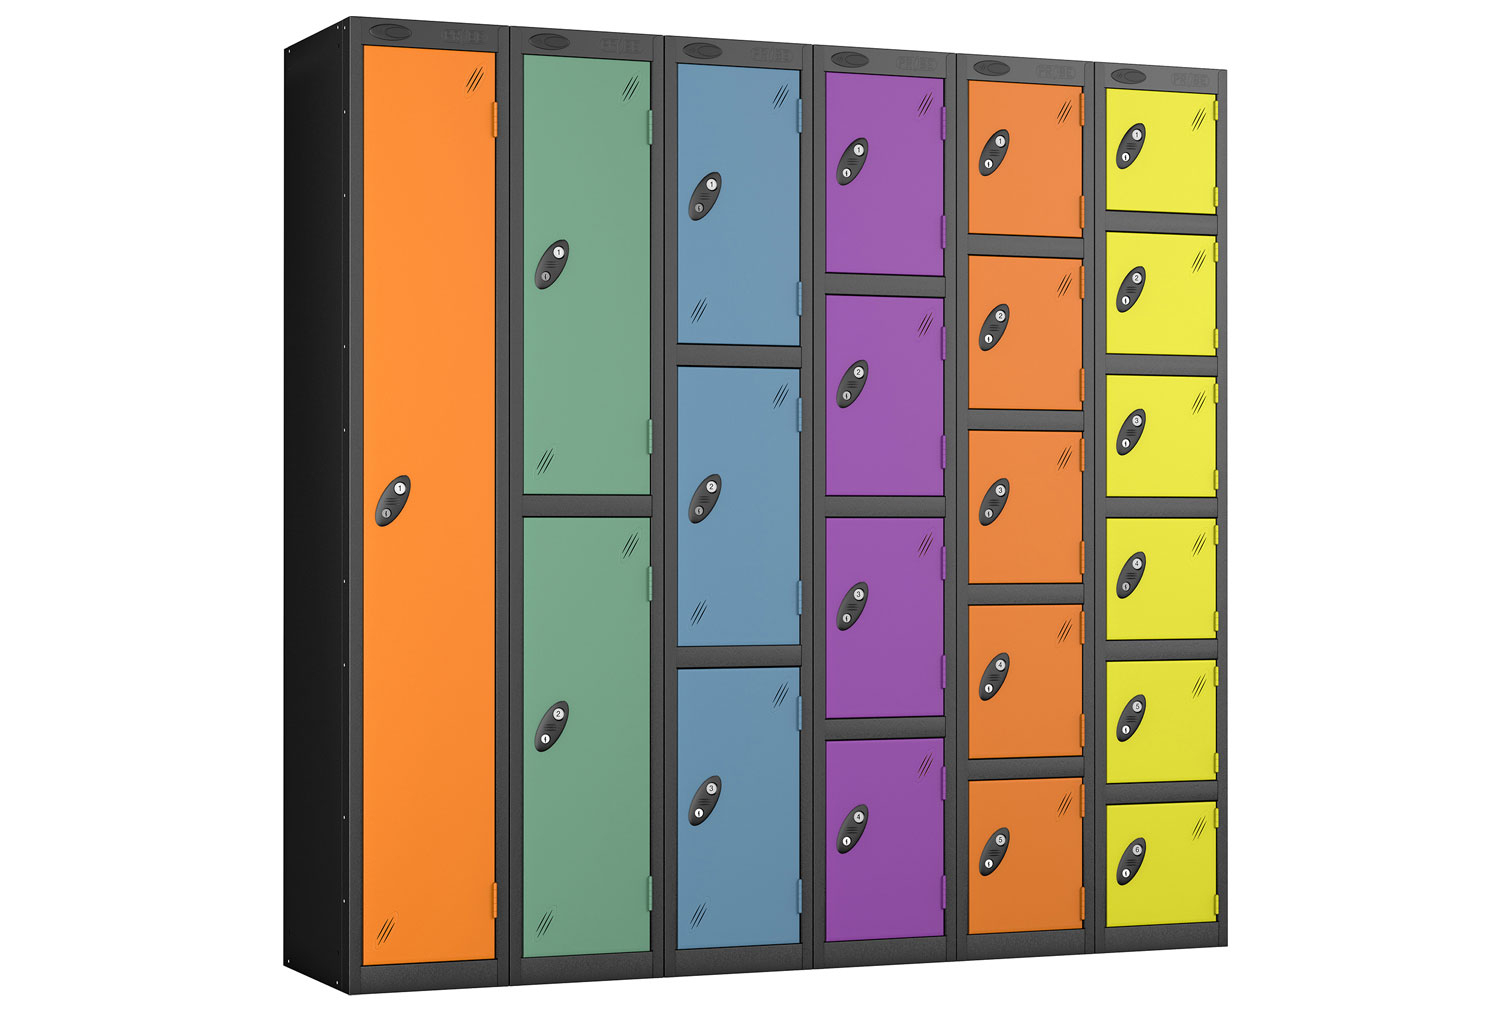 Probe Autumn Colour Lockers With Black Body, 2 Door, 31wx46dx178h (cm), Combination Lock, Black Body, Jade